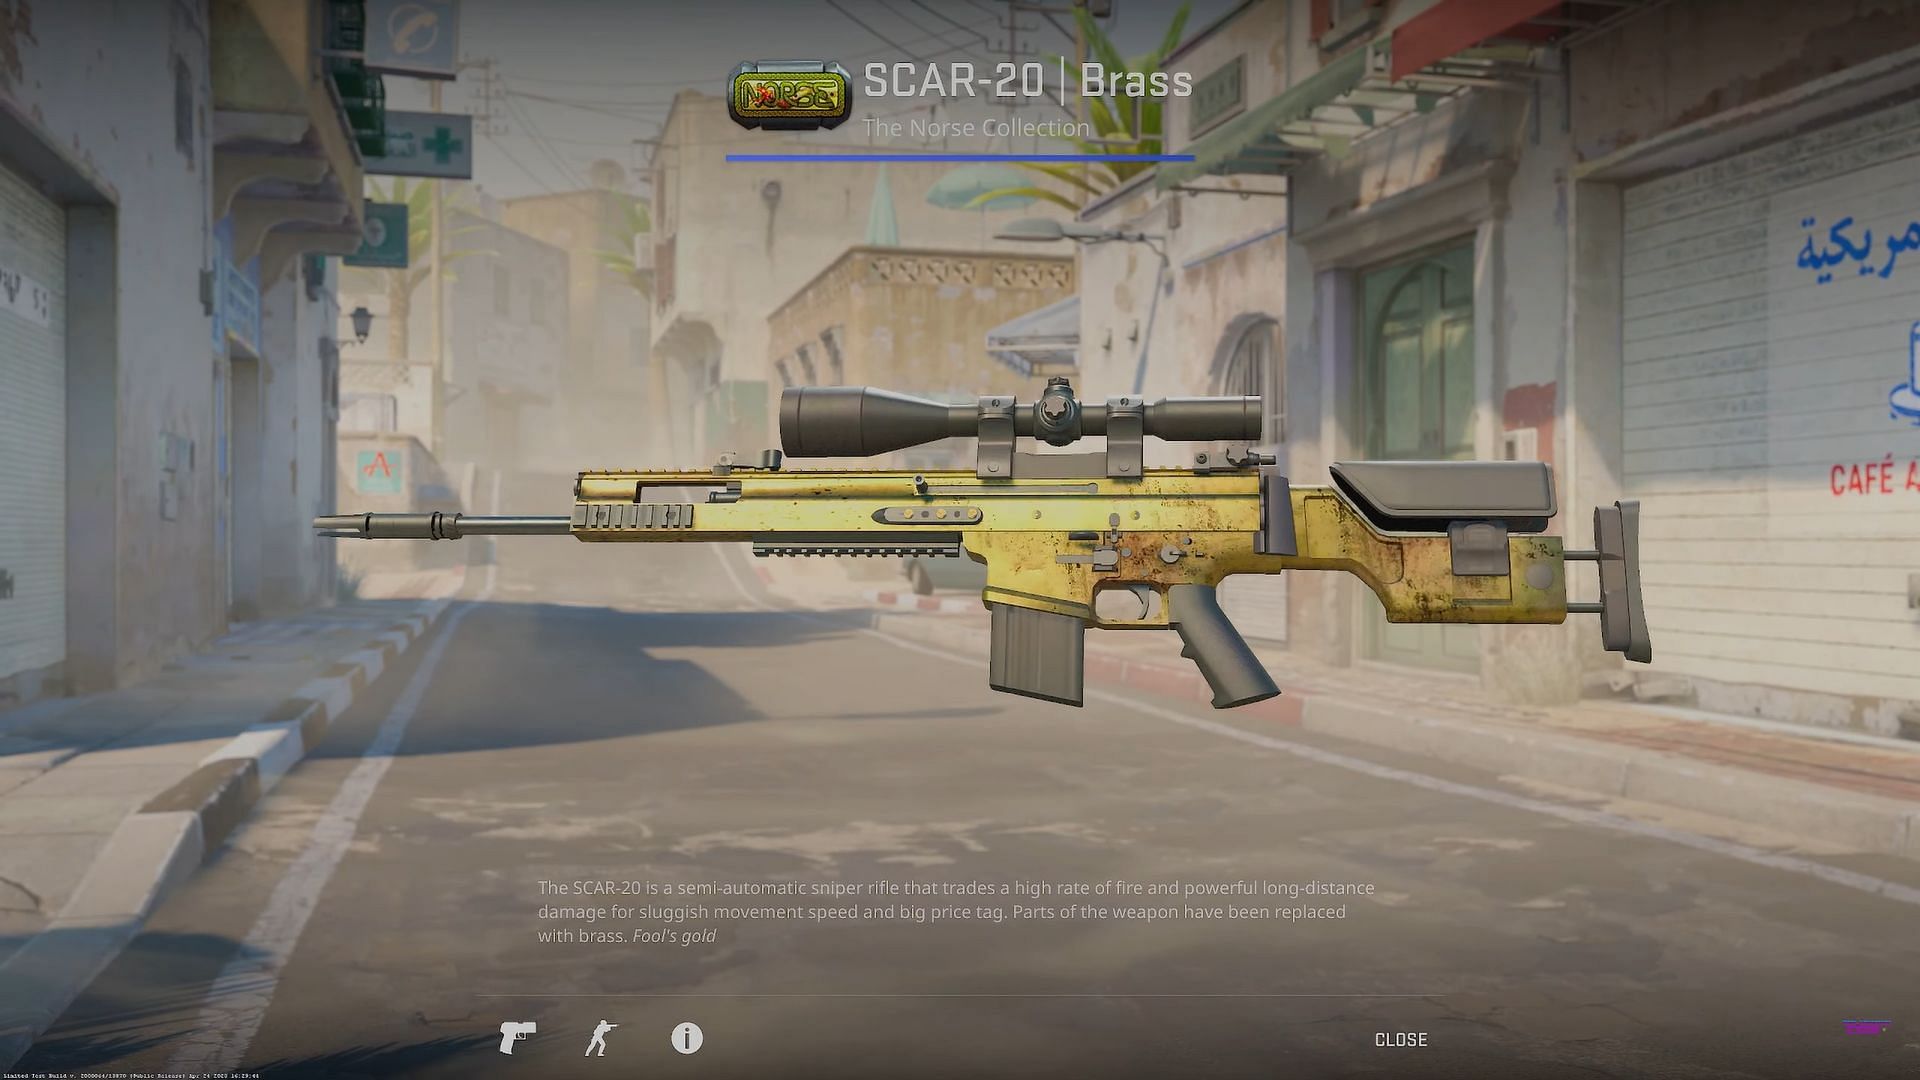 SCAR-20 Brass (image via Valve || YouTube/covernant)